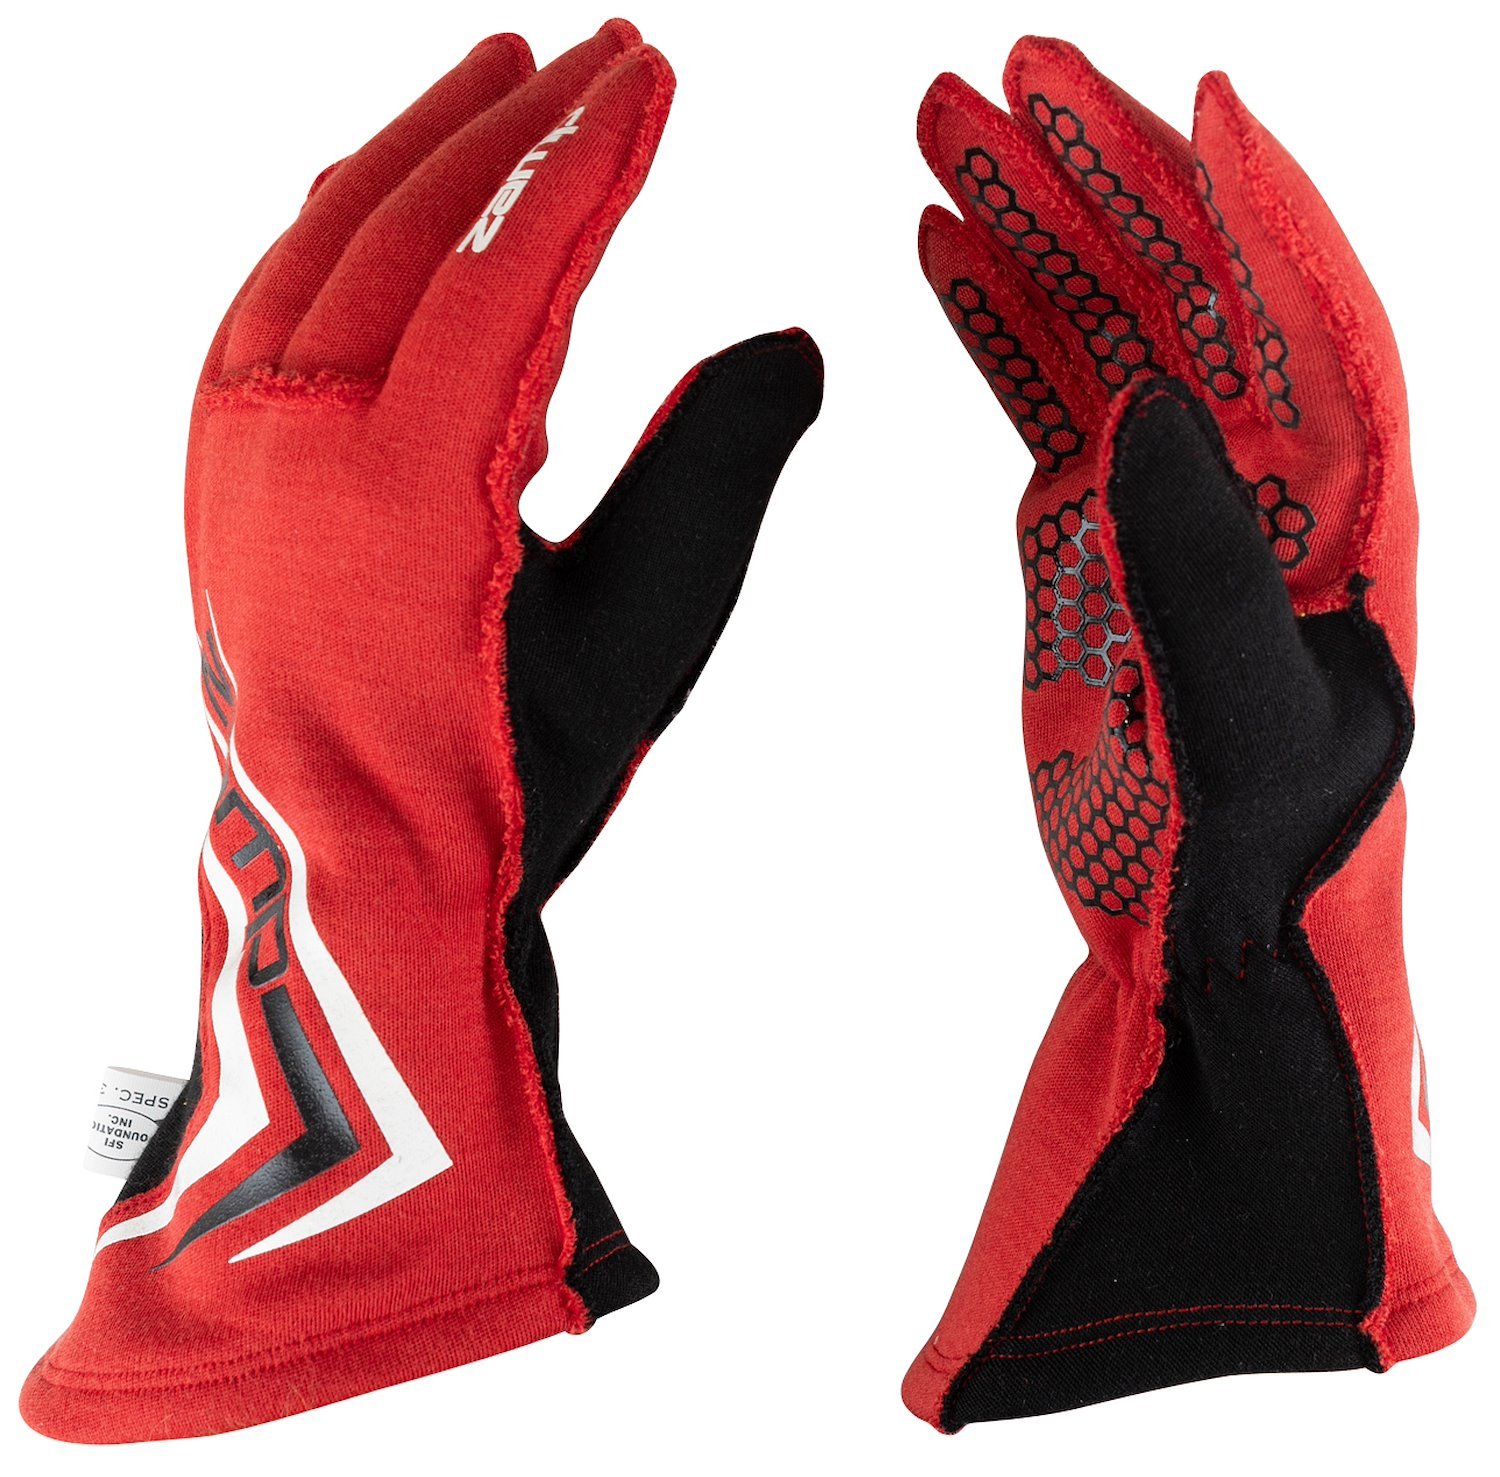 Zamp RZ-60 Racing Gloves